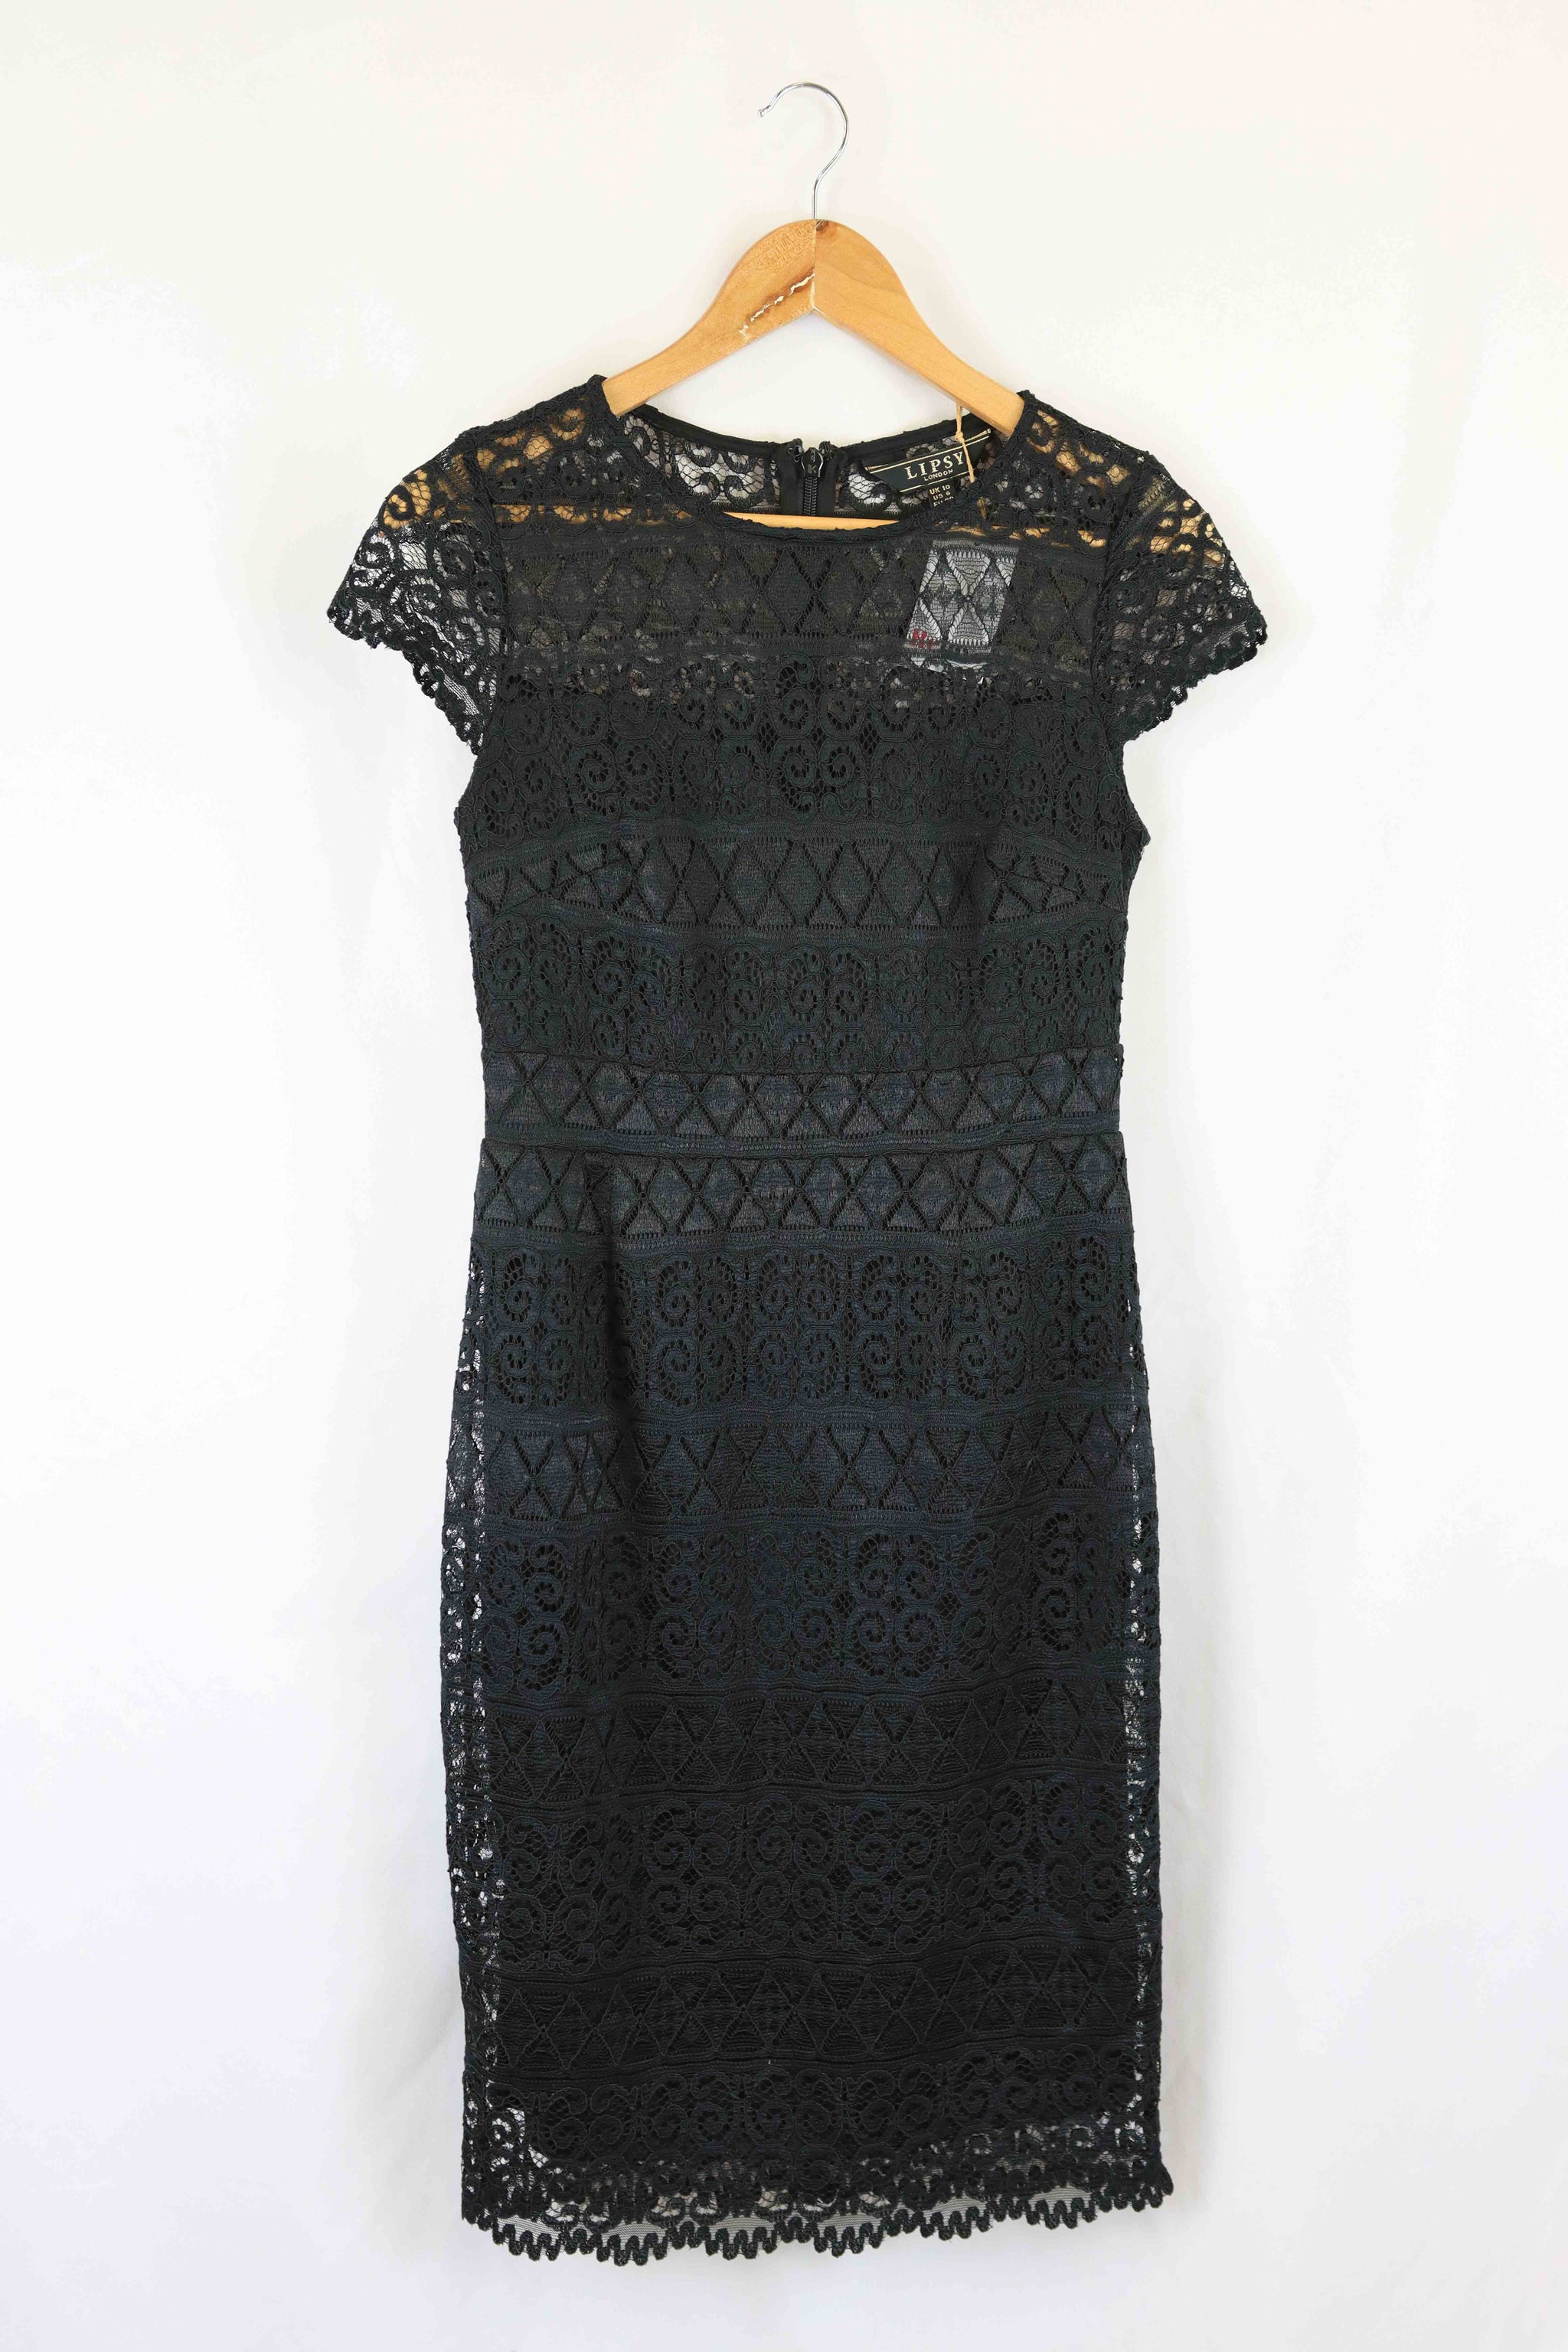 Lipsy London Black Lace Dress 10 - Reluv Clothing Australia